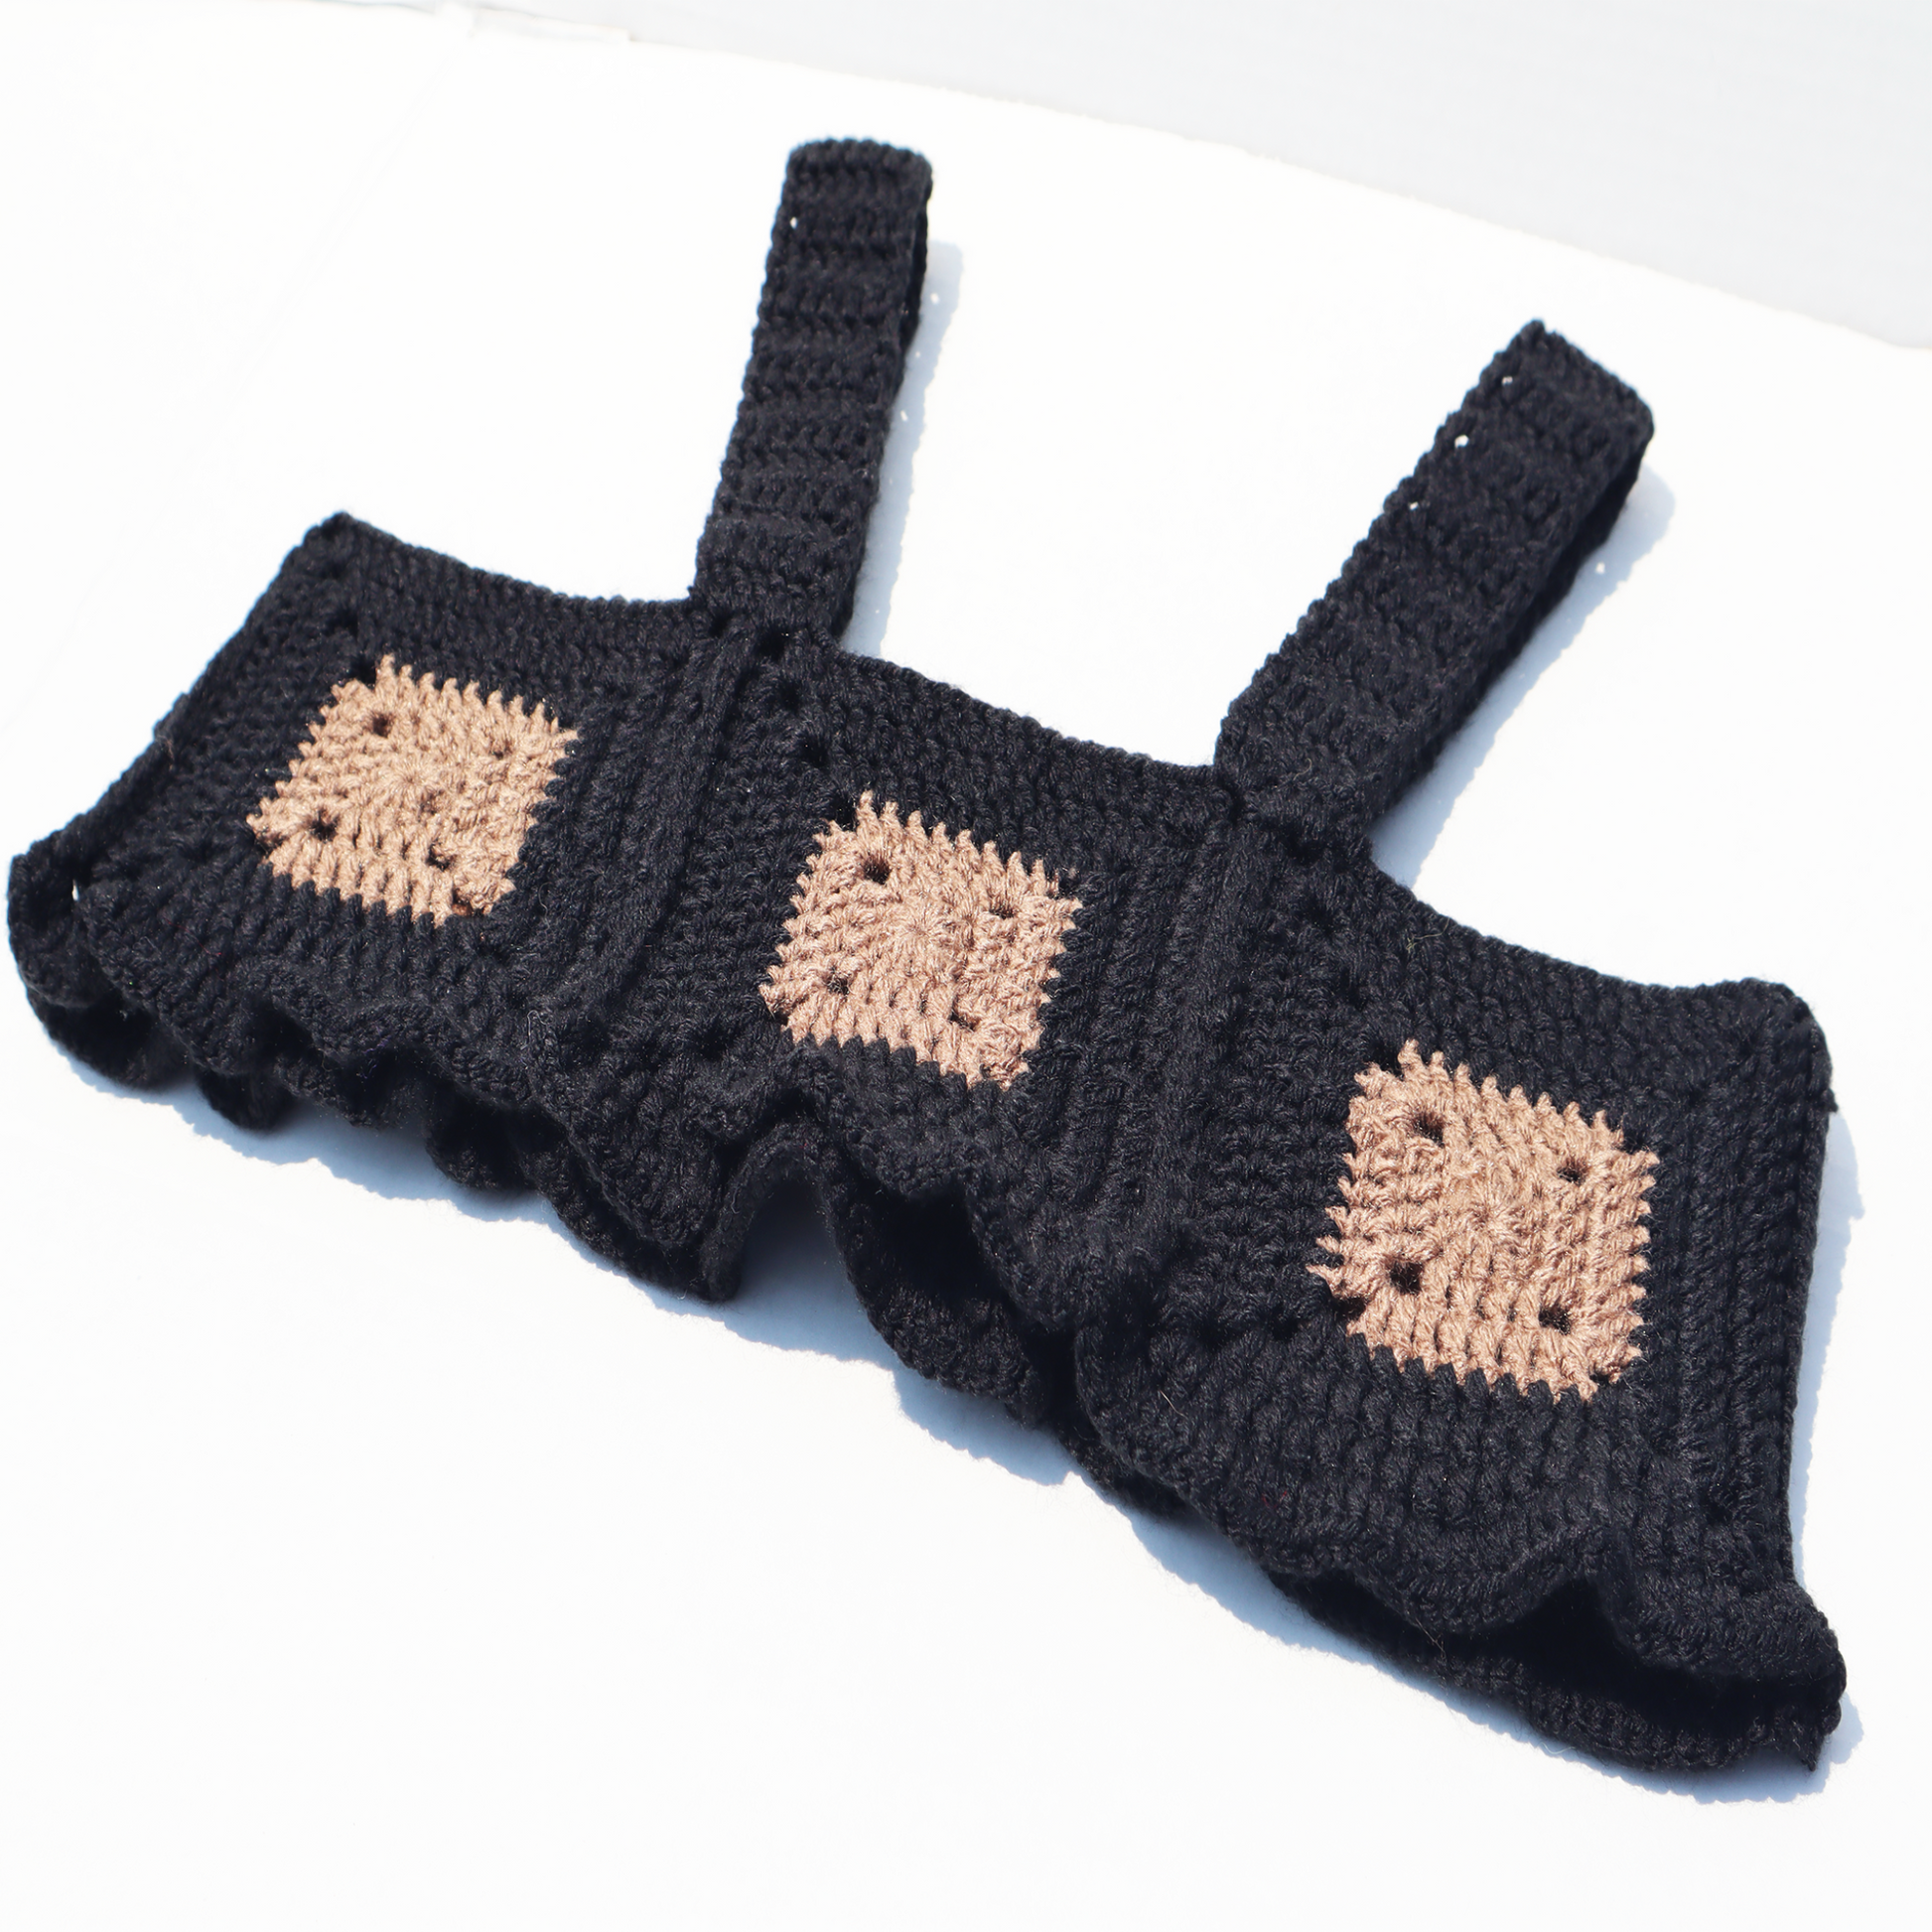 shopdigitalgirl crochet crop top size small color black 